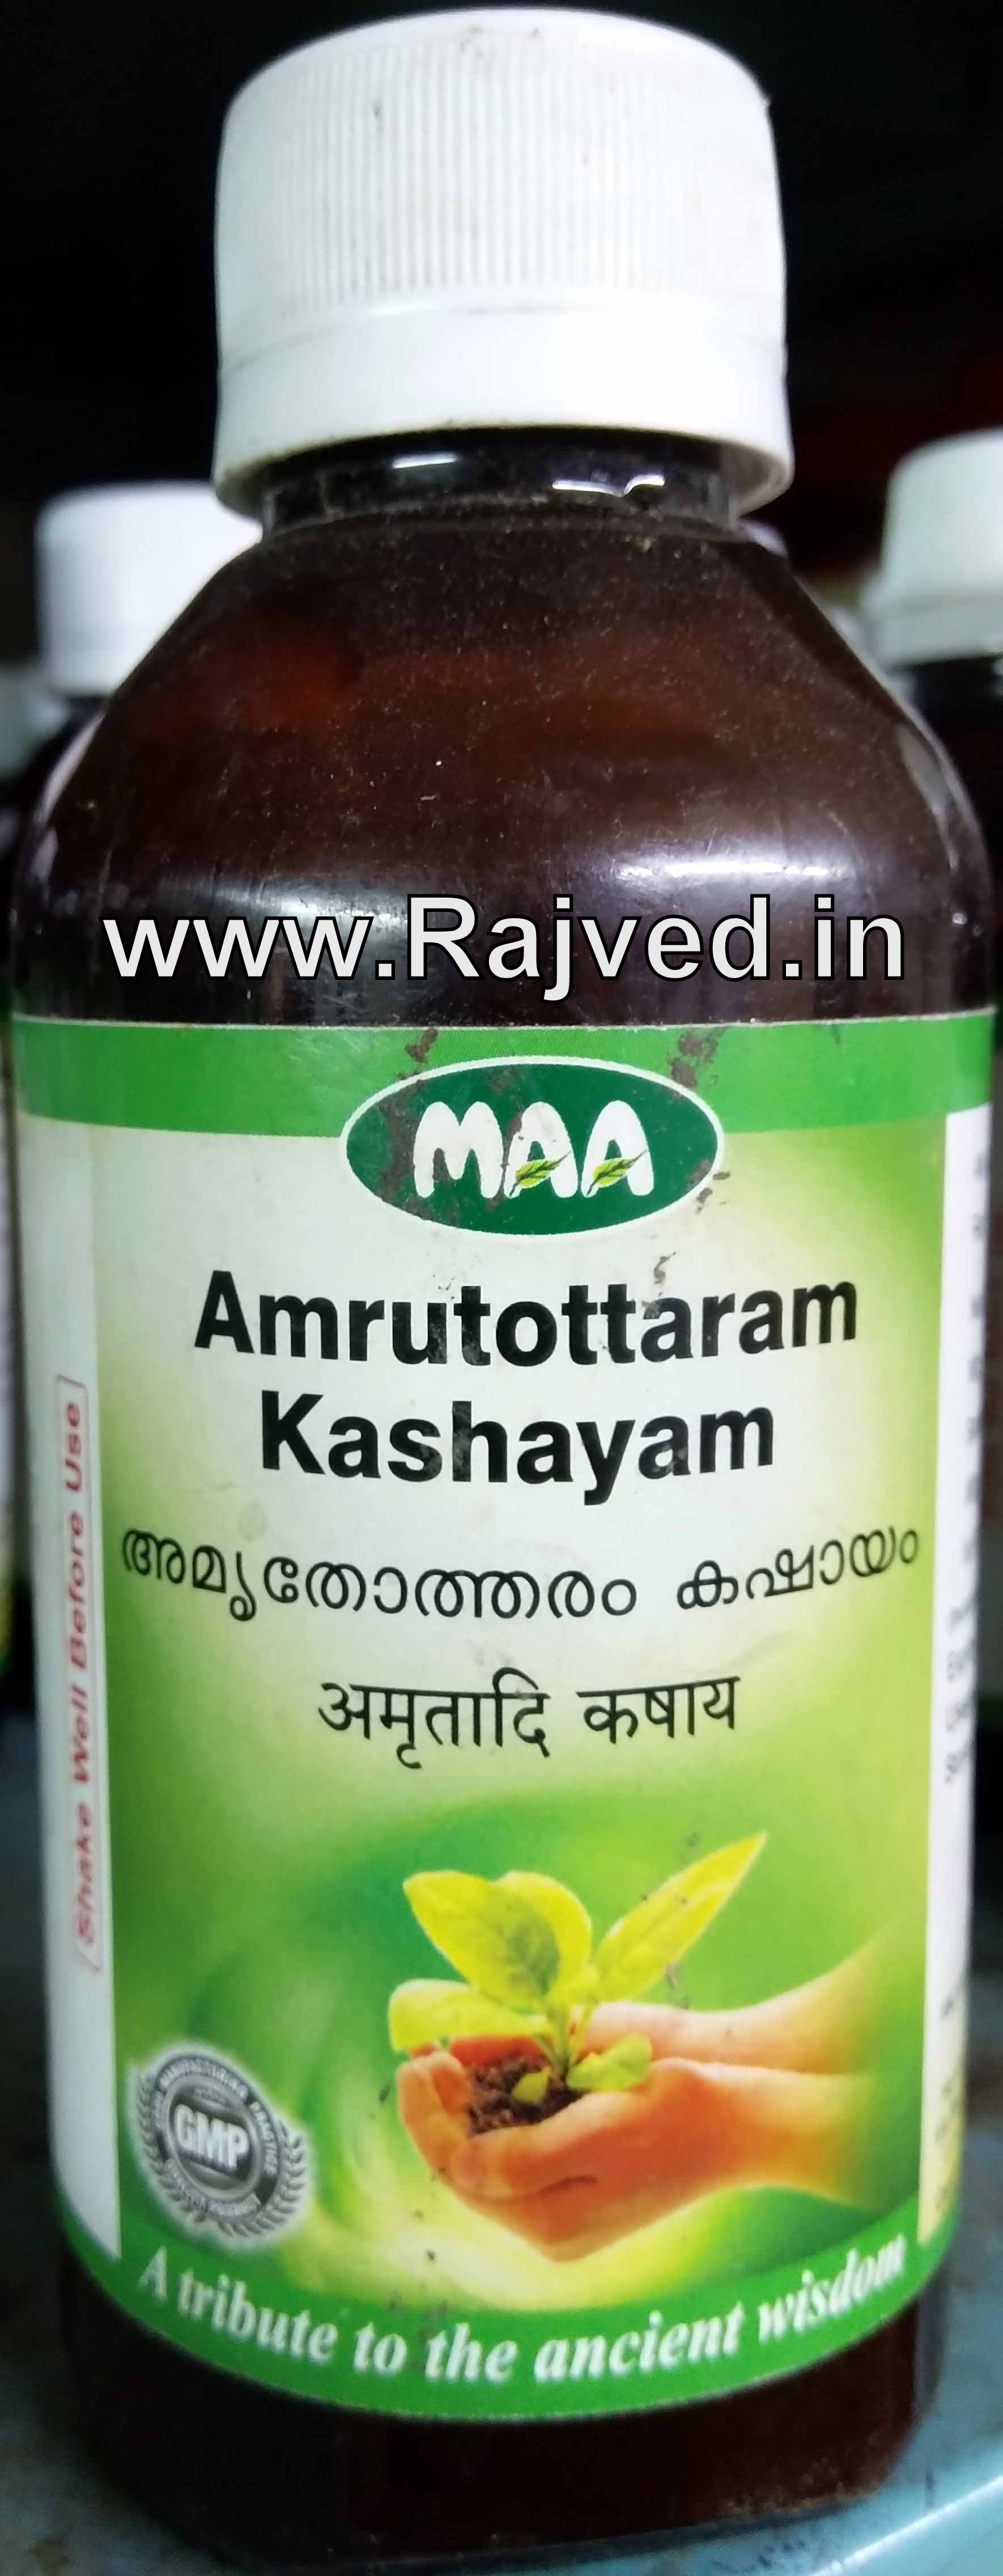 amrutottaram kashayam 200 ml upto 15% off malabar ayurved ashram